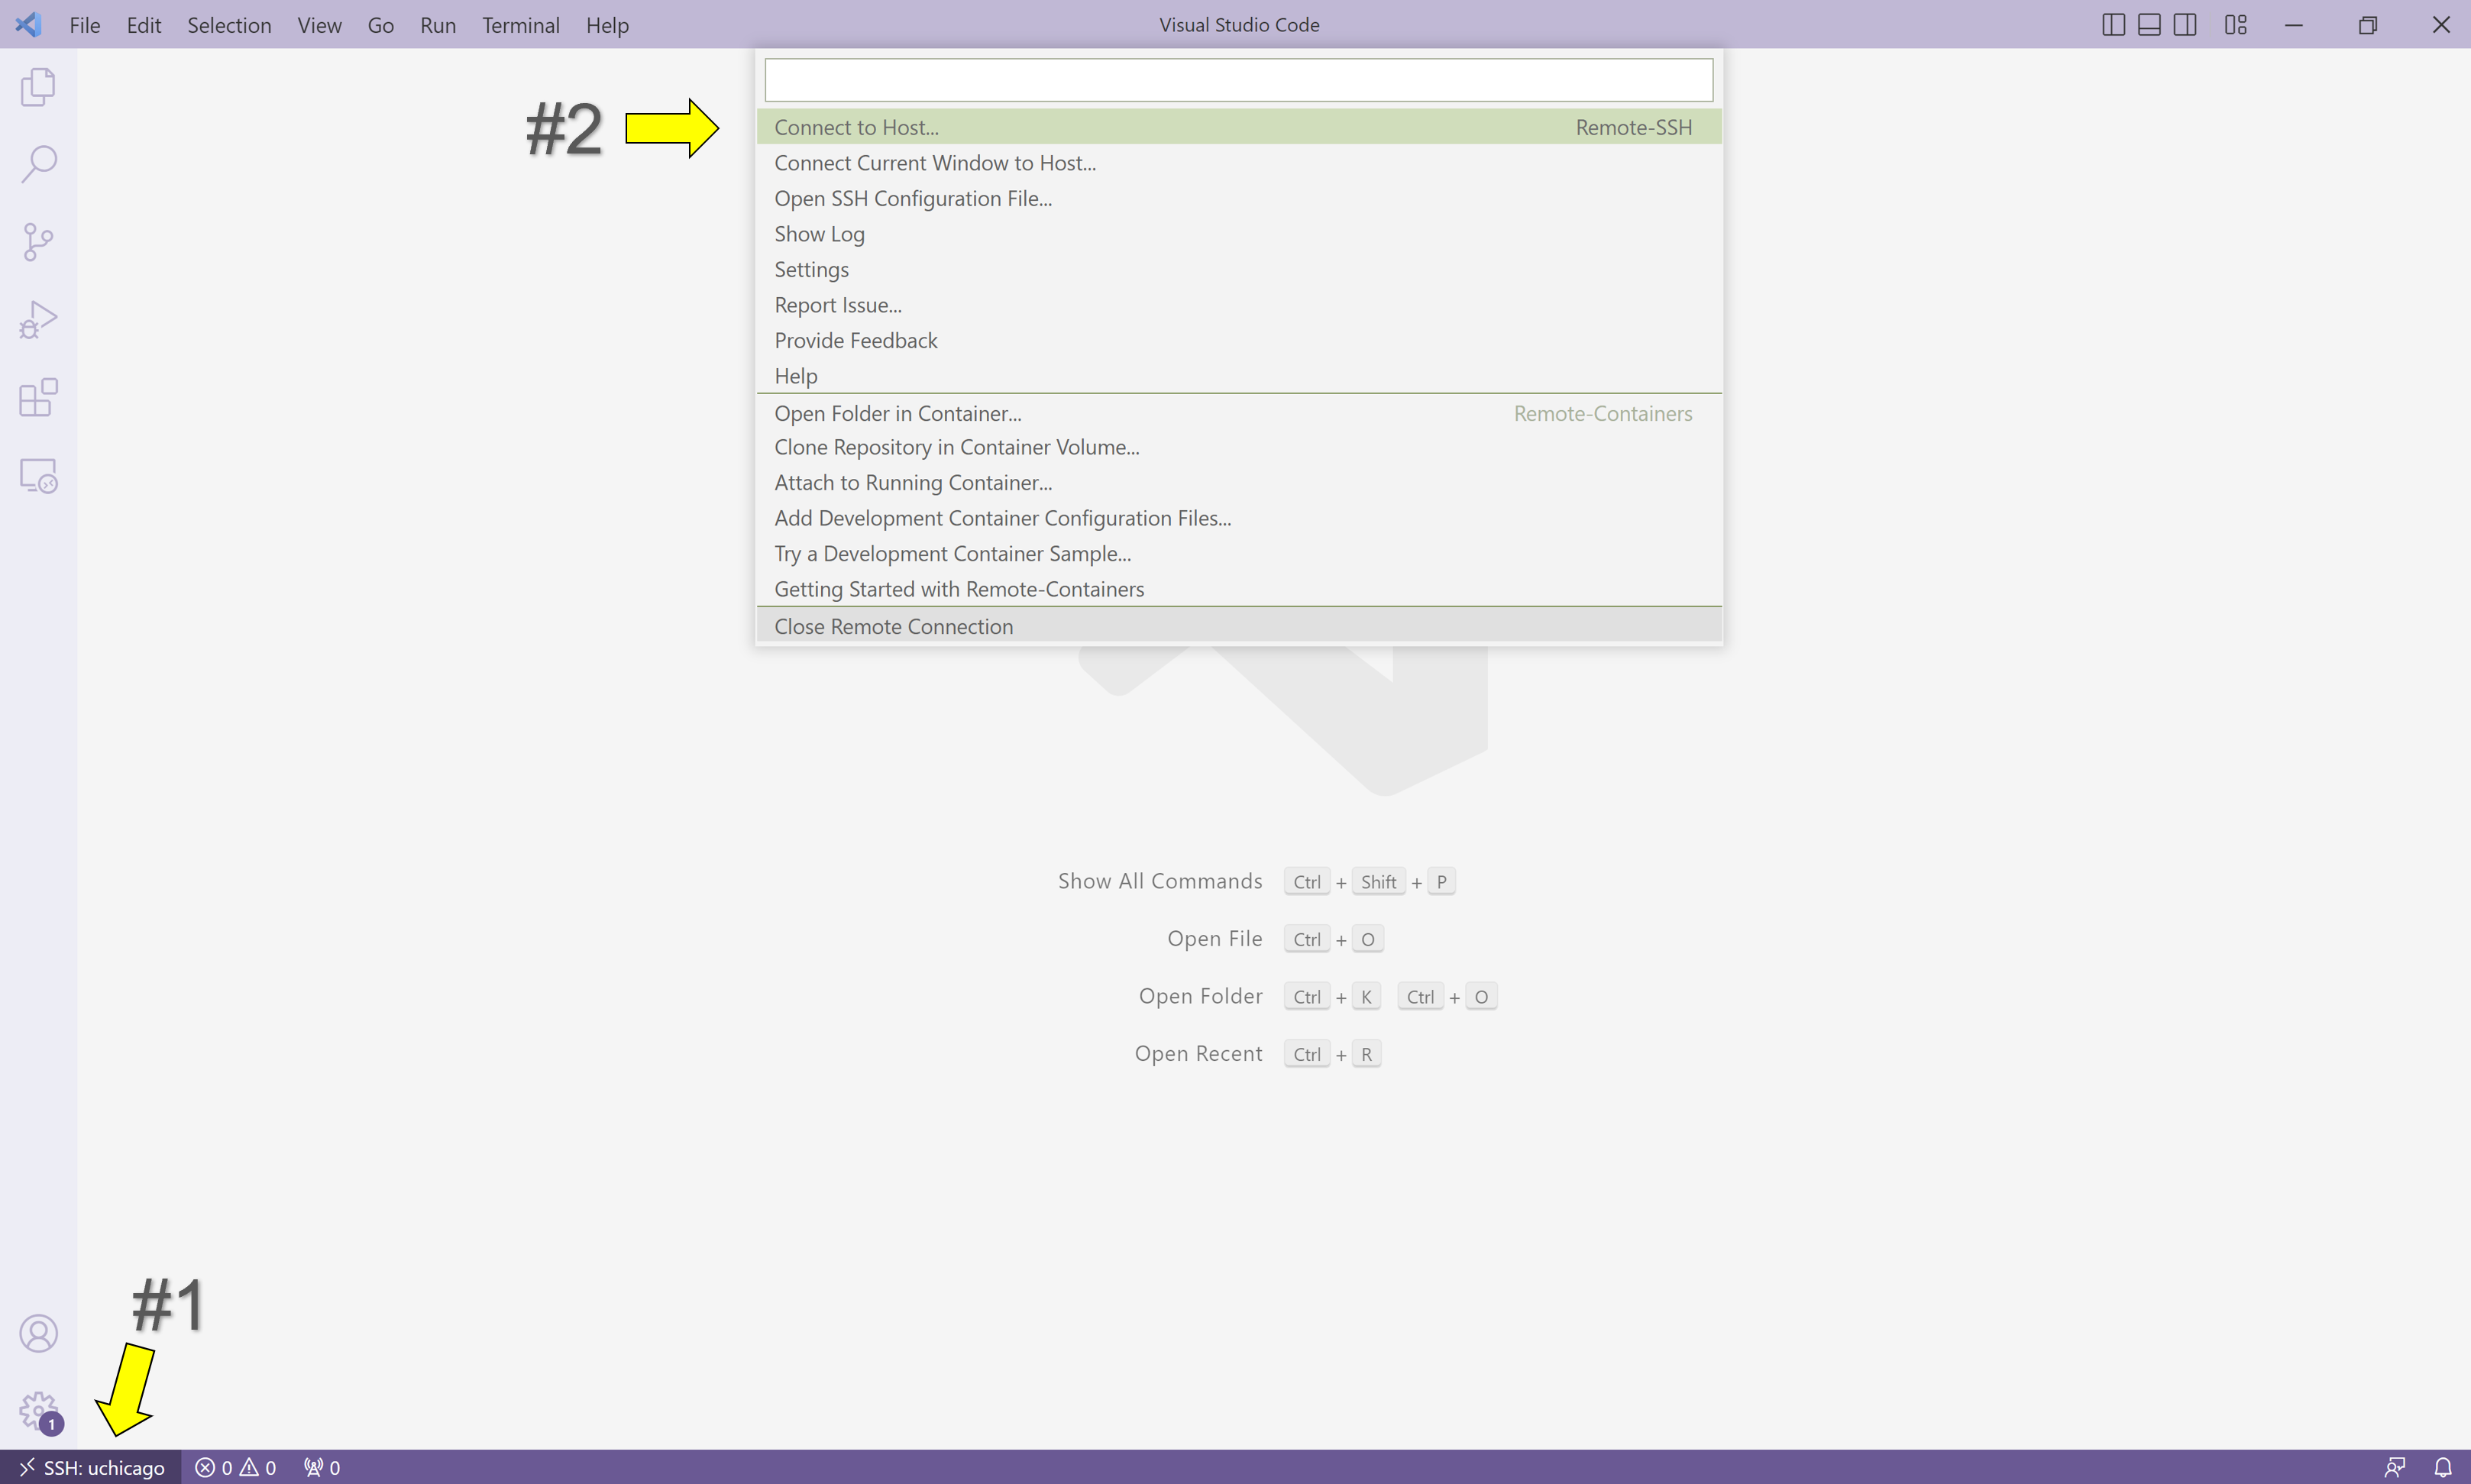 VS Code Remote SSH close option screenshot